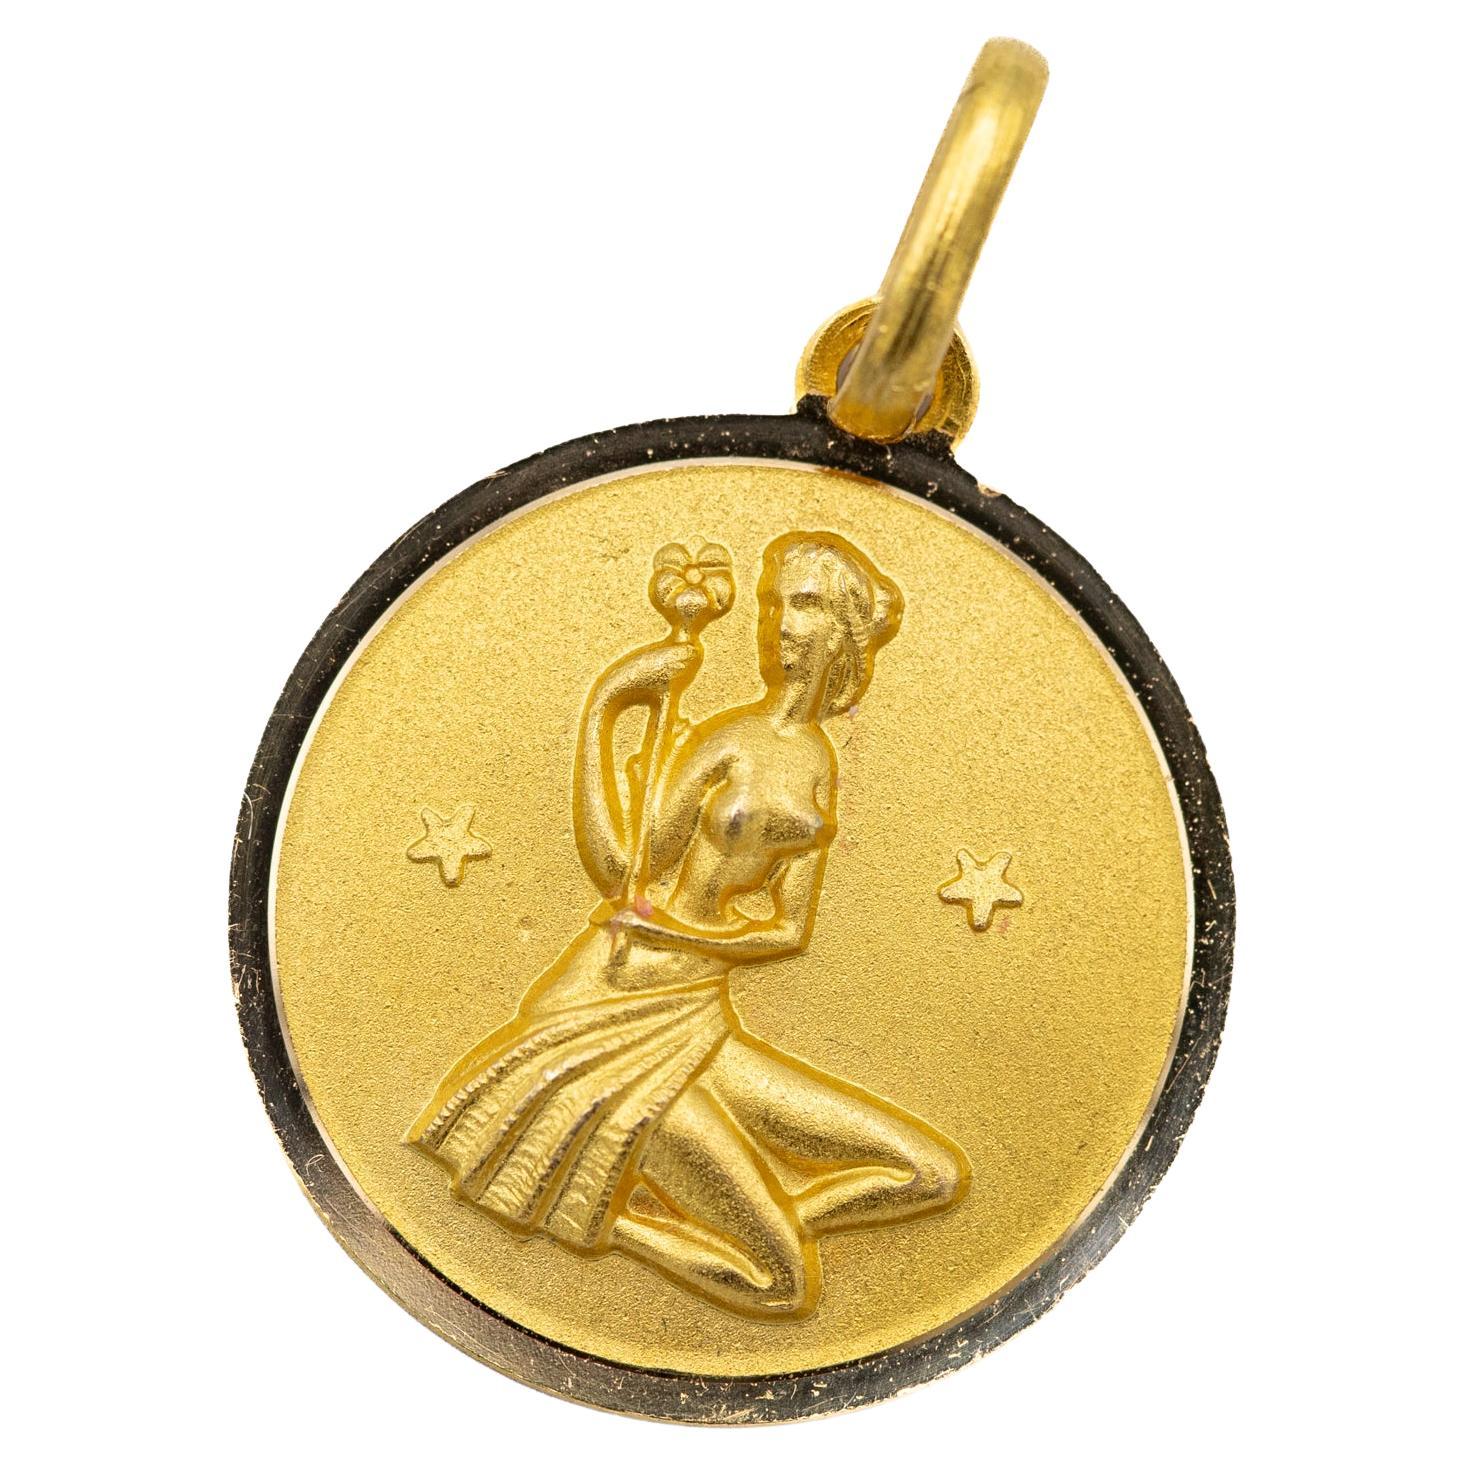 Vintage 18k zodiac charm pendant - Virgo charm - solid yellow gold For Sale